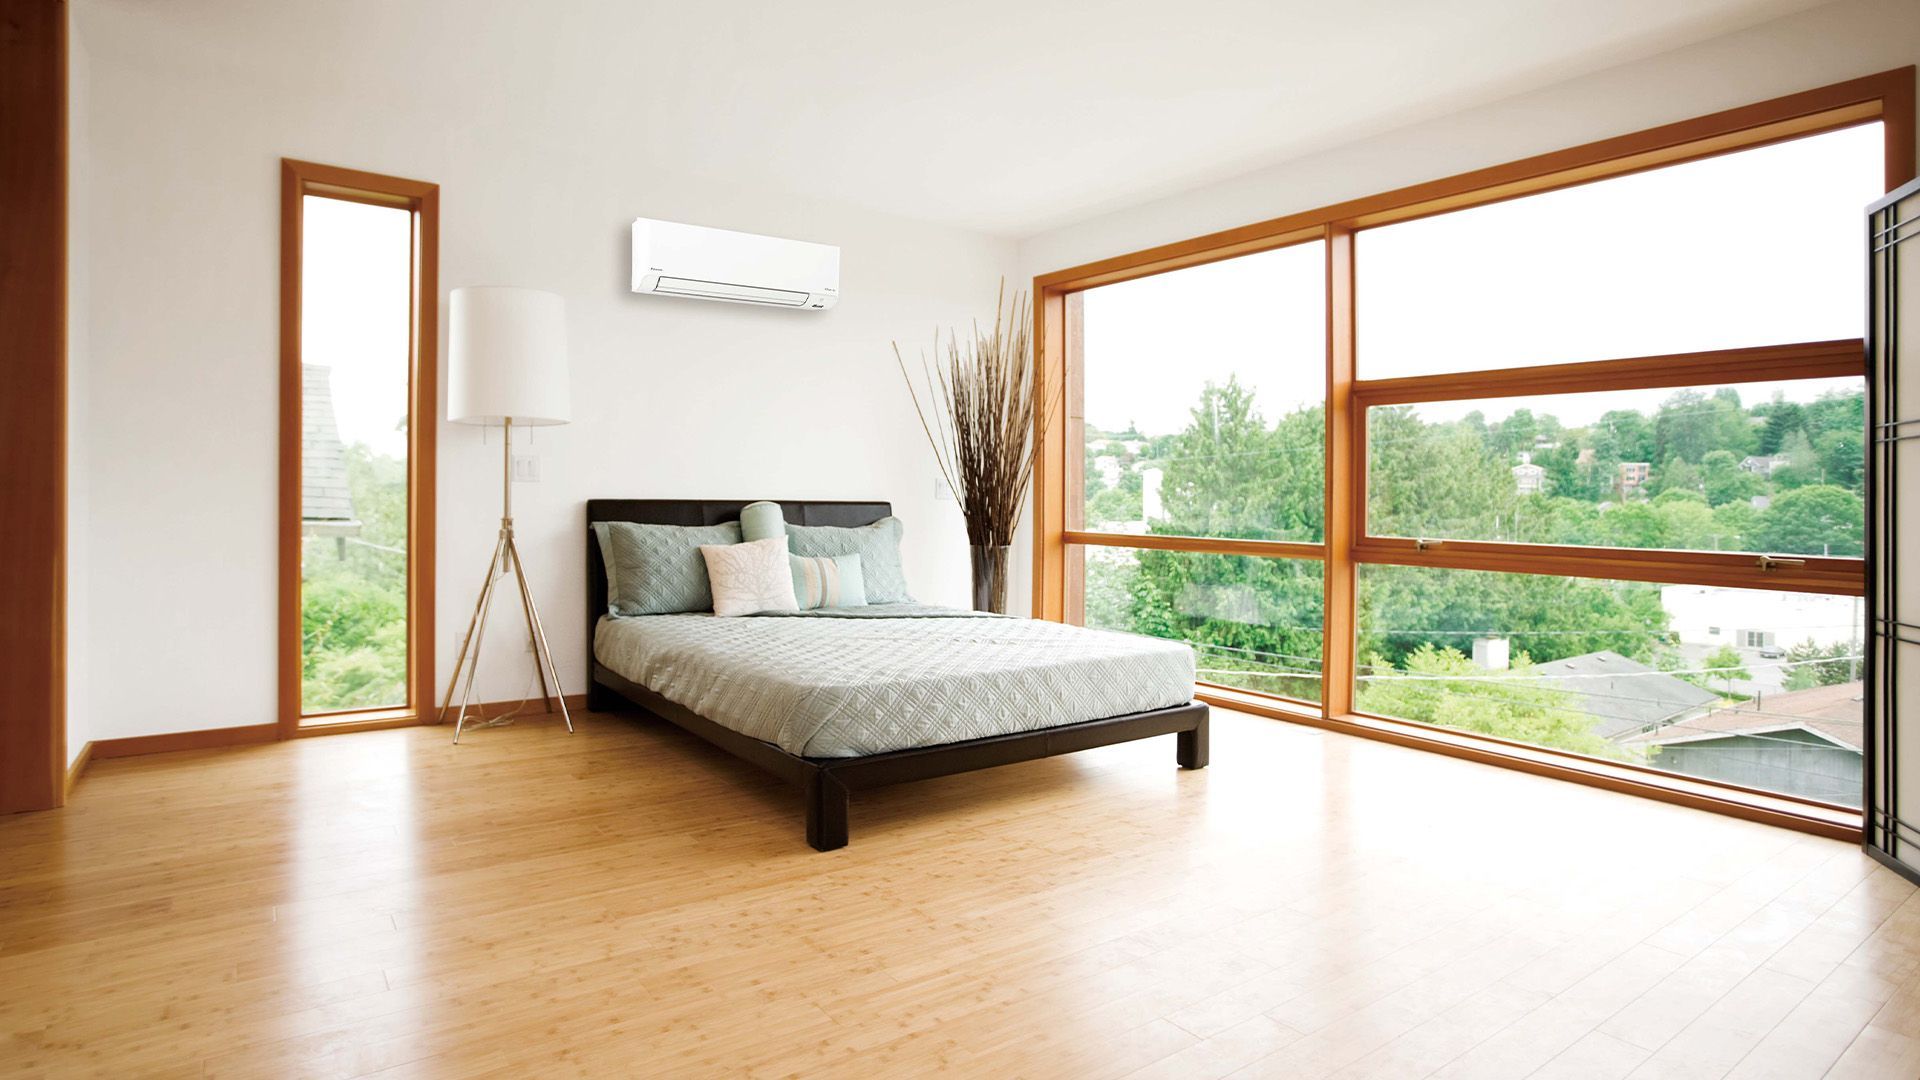 Daikin Alira Heat Pump in bedroom